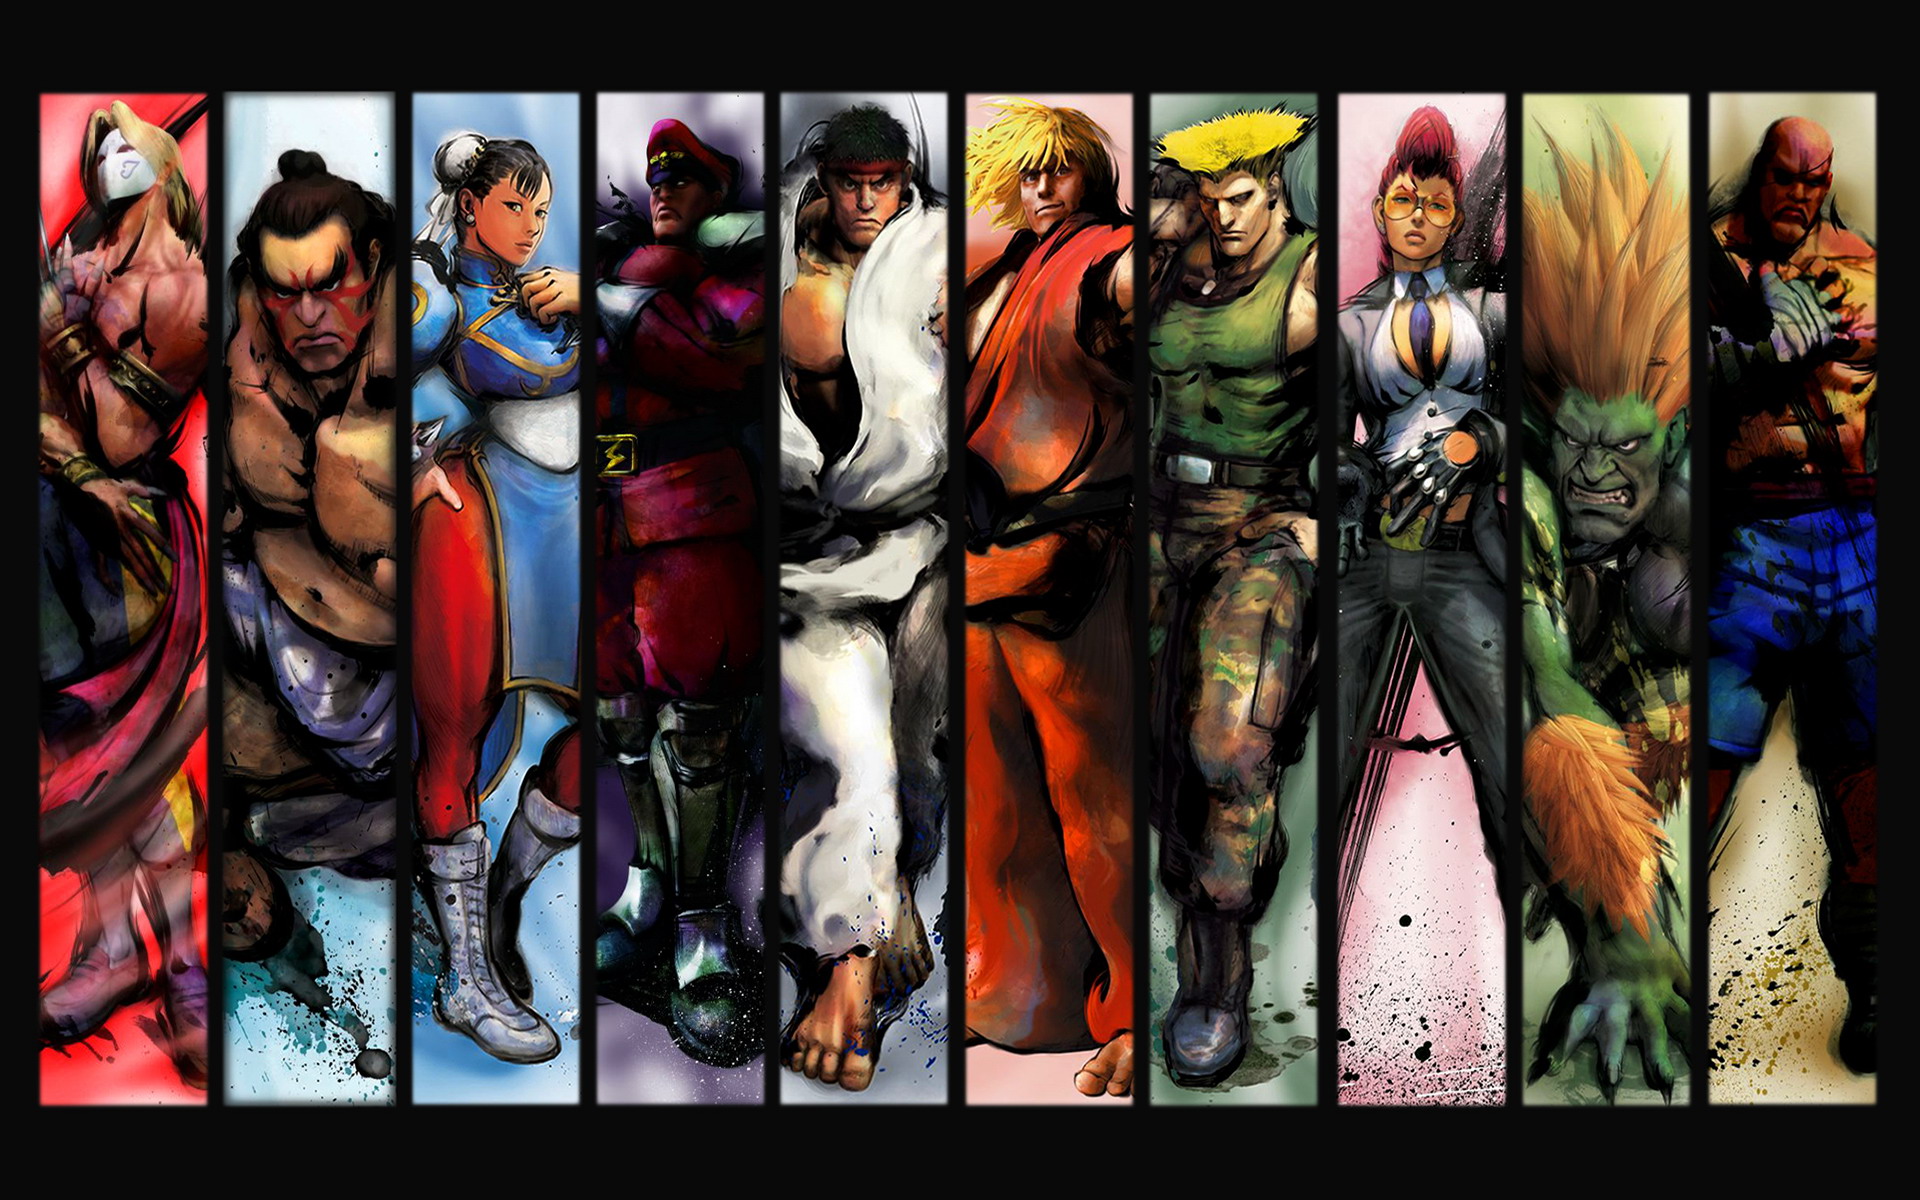 Street Fighter Iv Wallpaper HD